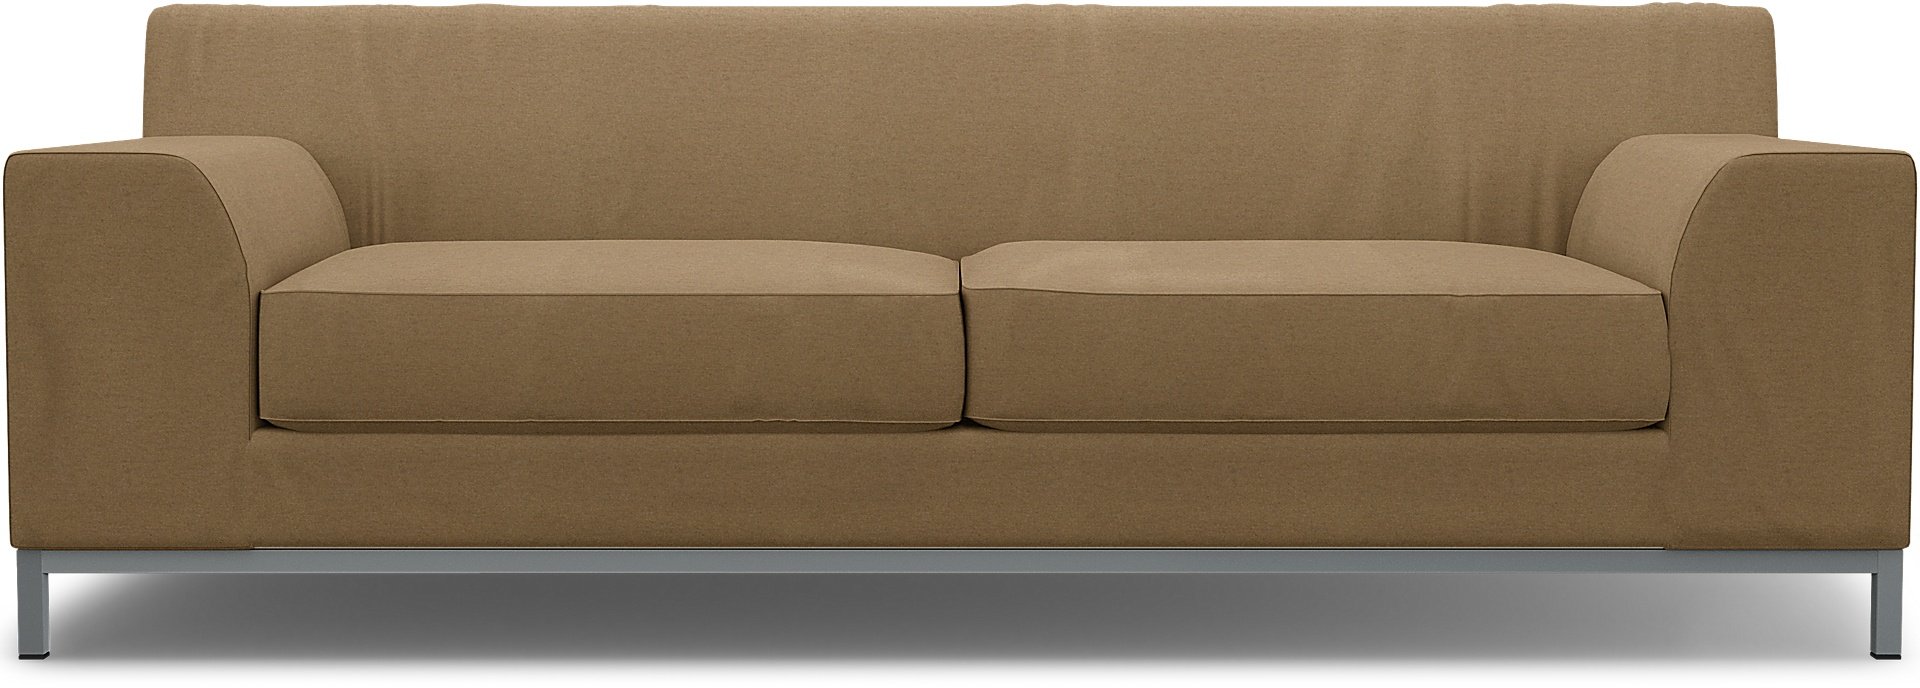 IKEA - Kramfors 3 Seater Sofa Cover, Sand, Wool - Bemz